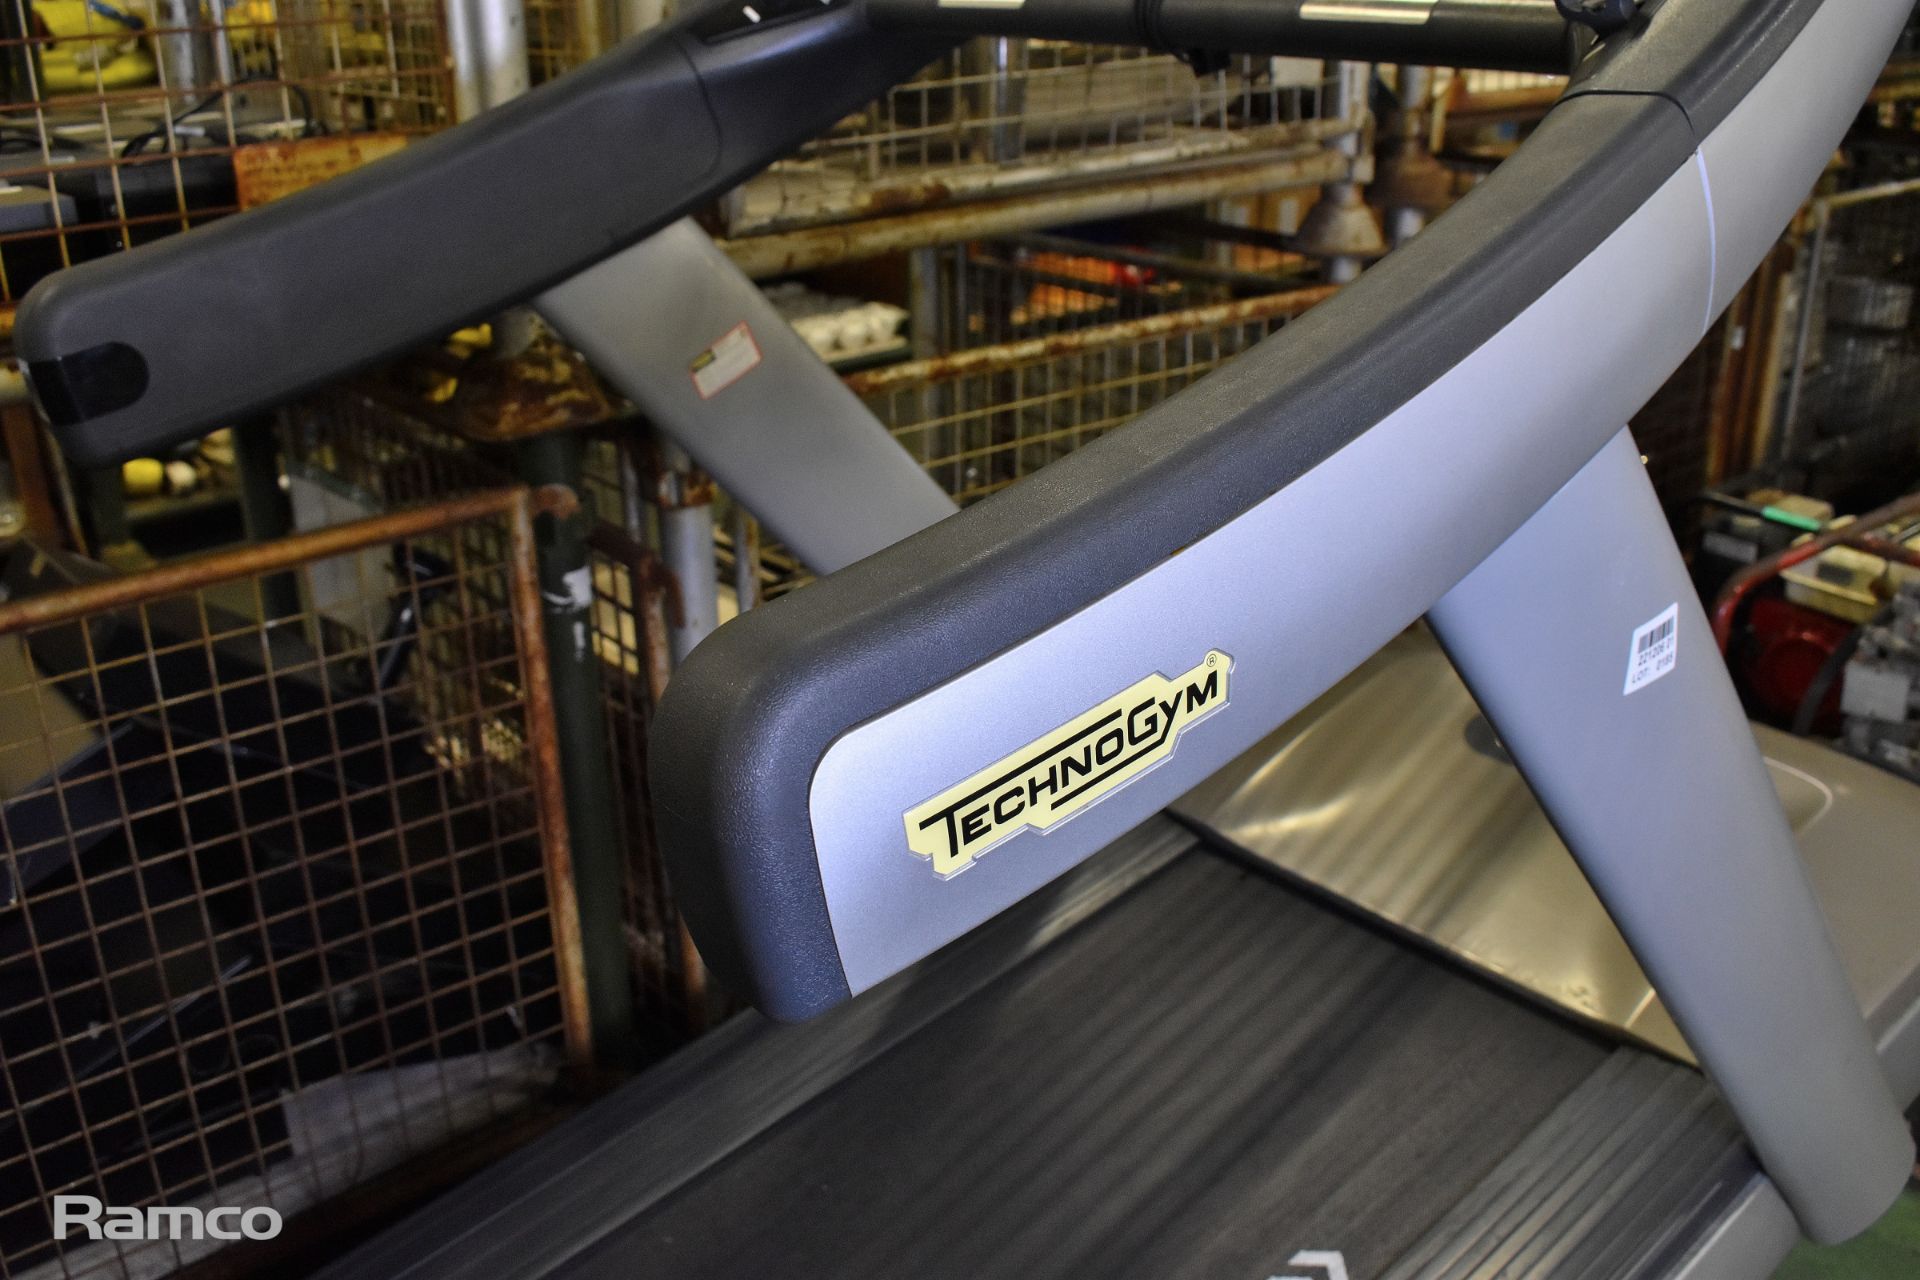 Technogym Run Now 700 treadmill - Image 8 of 11